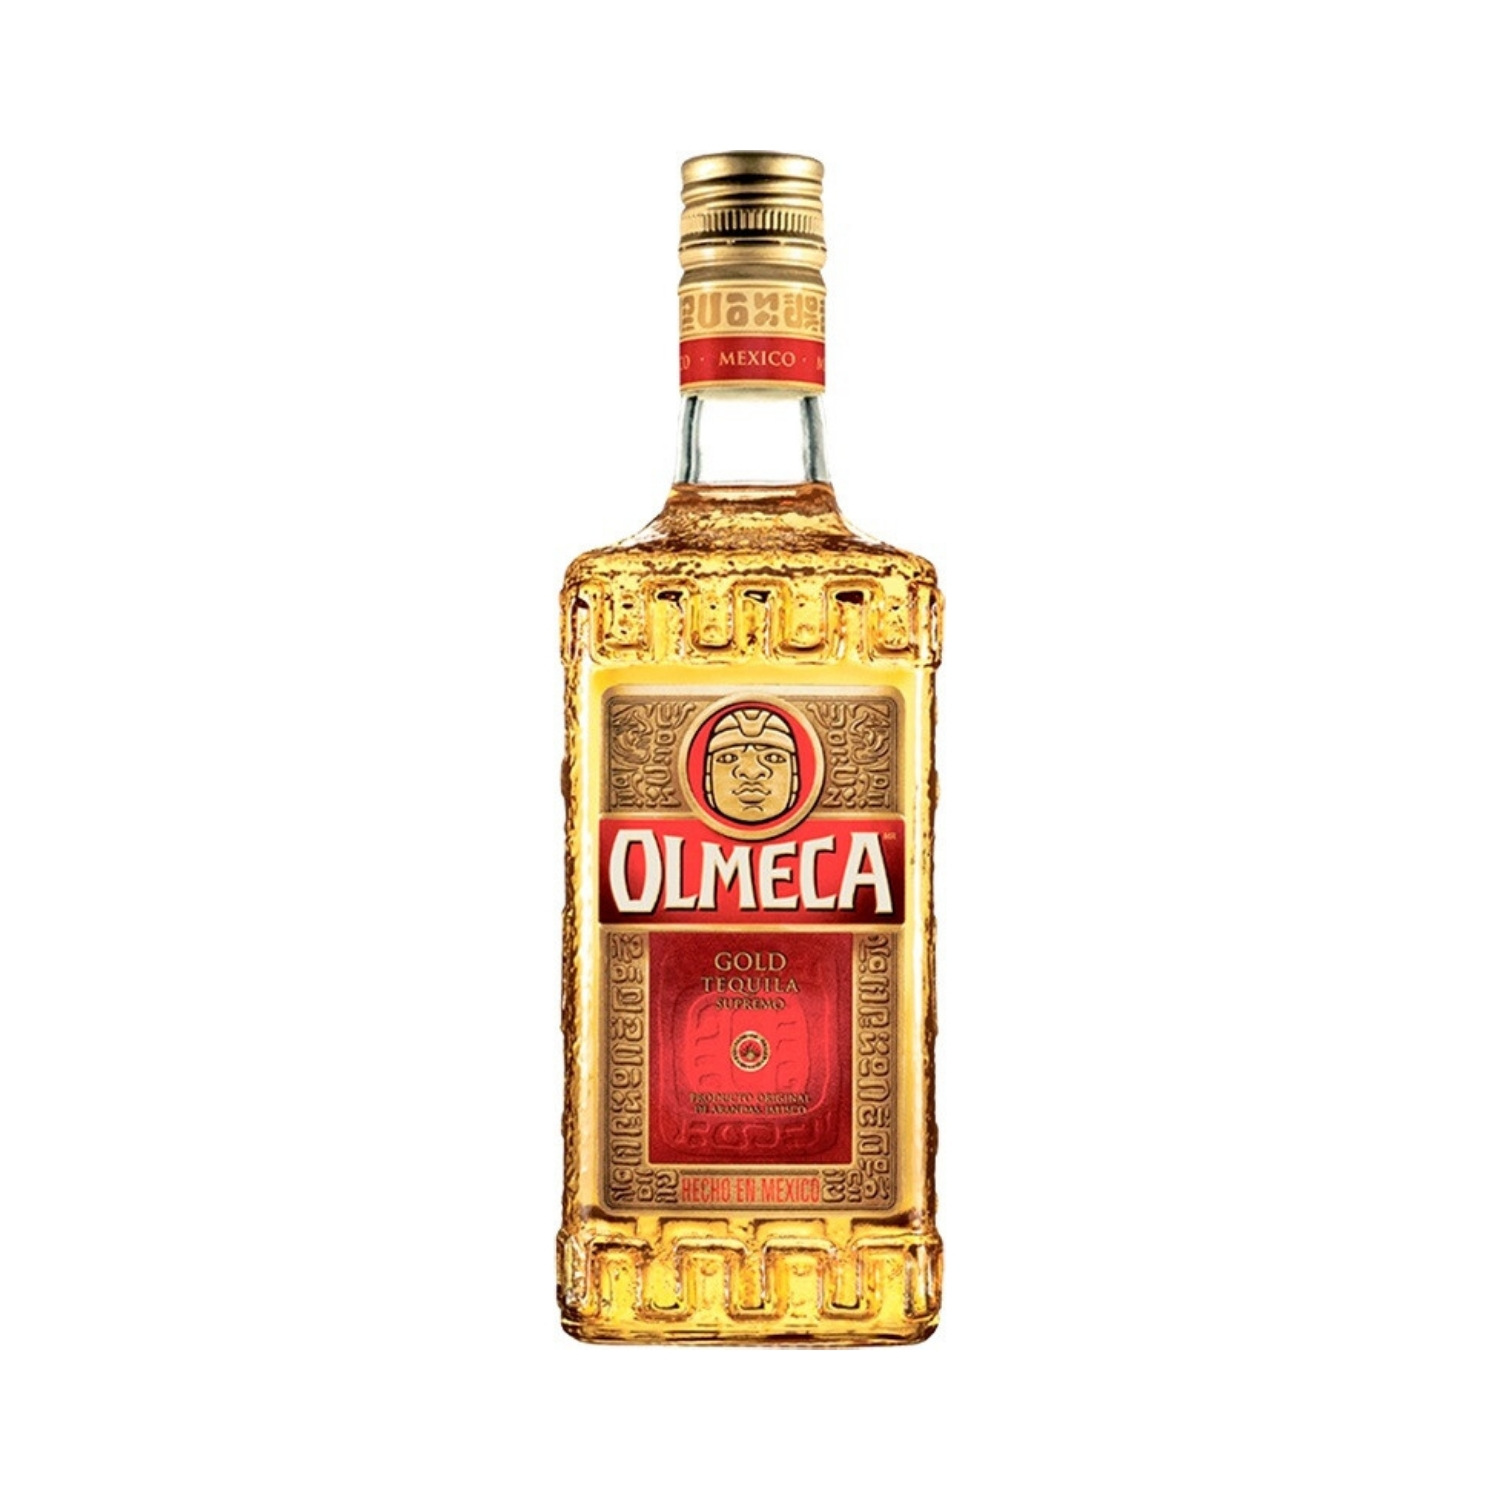 Tequila OLMECA GOLD